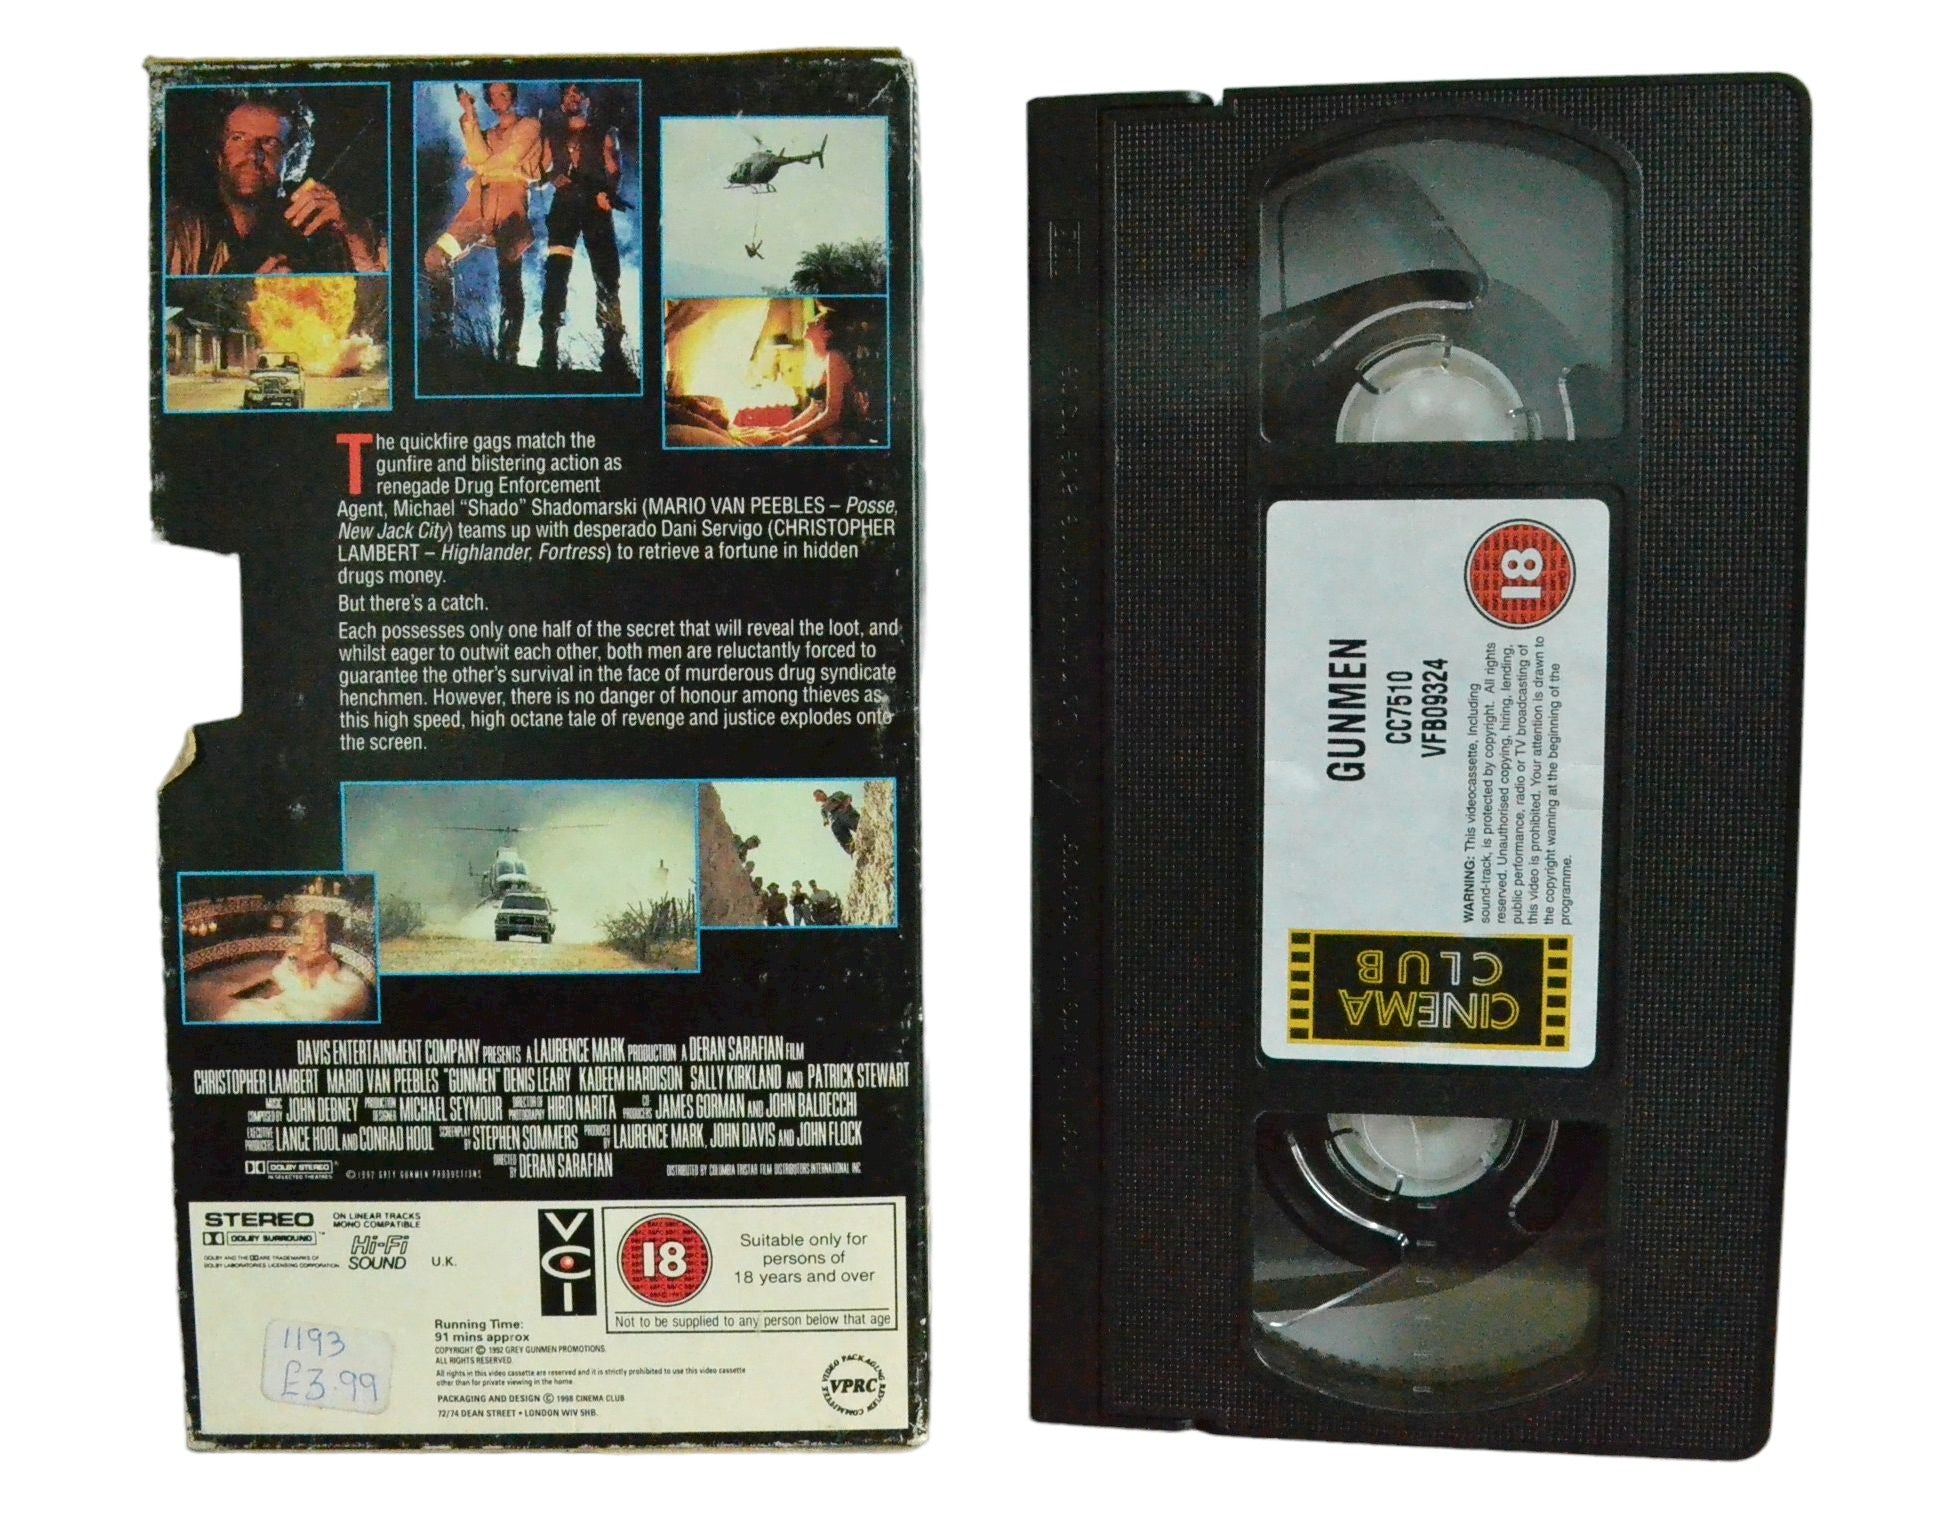 Gunmen - Christopher Lambert - Cinema Club - Carton Box - Pal VHS-